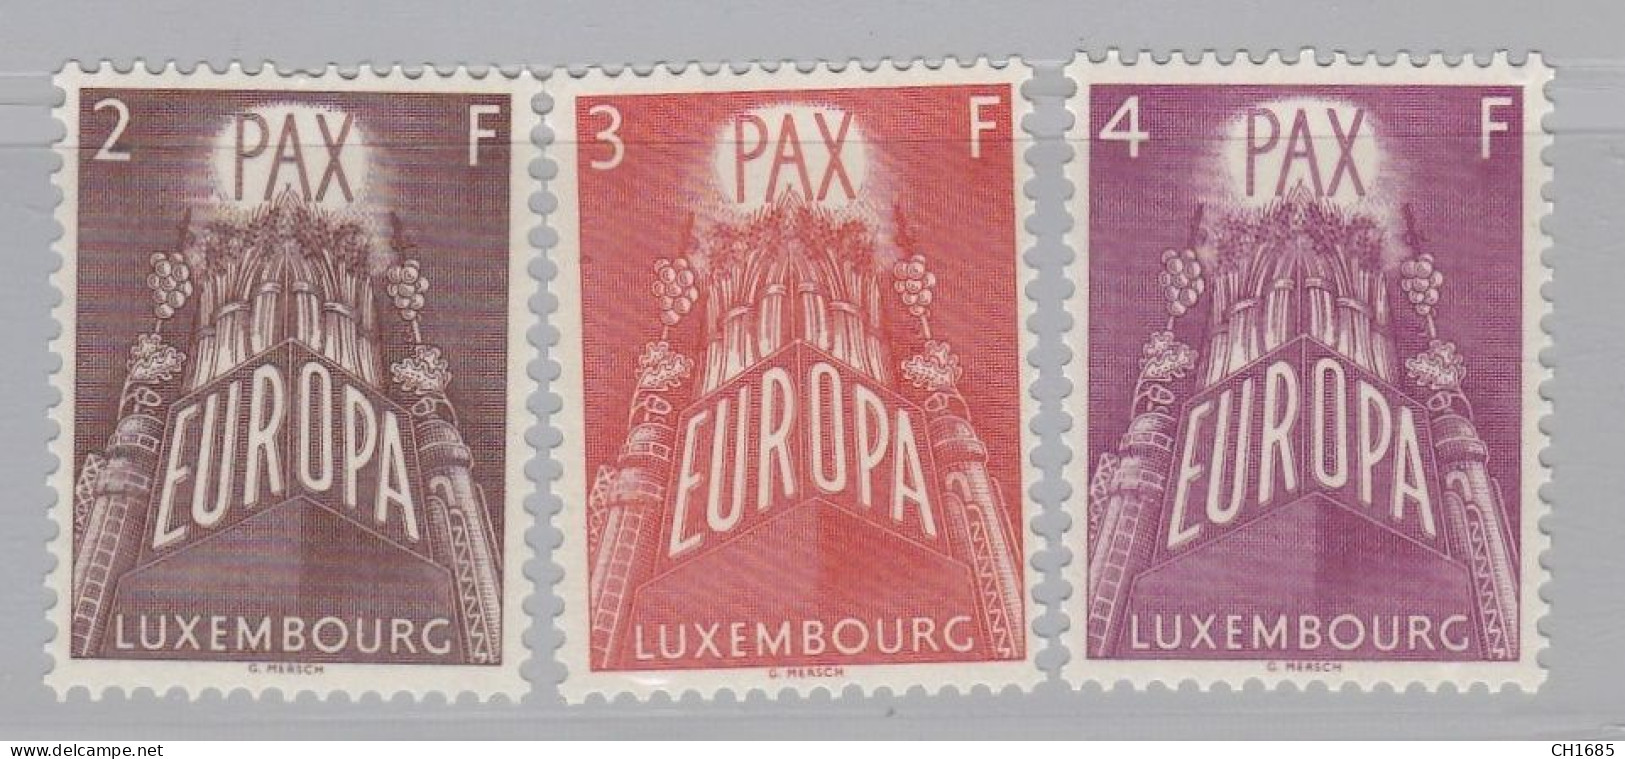 EUROPA : Luxembourg  Yvert 531 à 533  Neuf XX - 1957